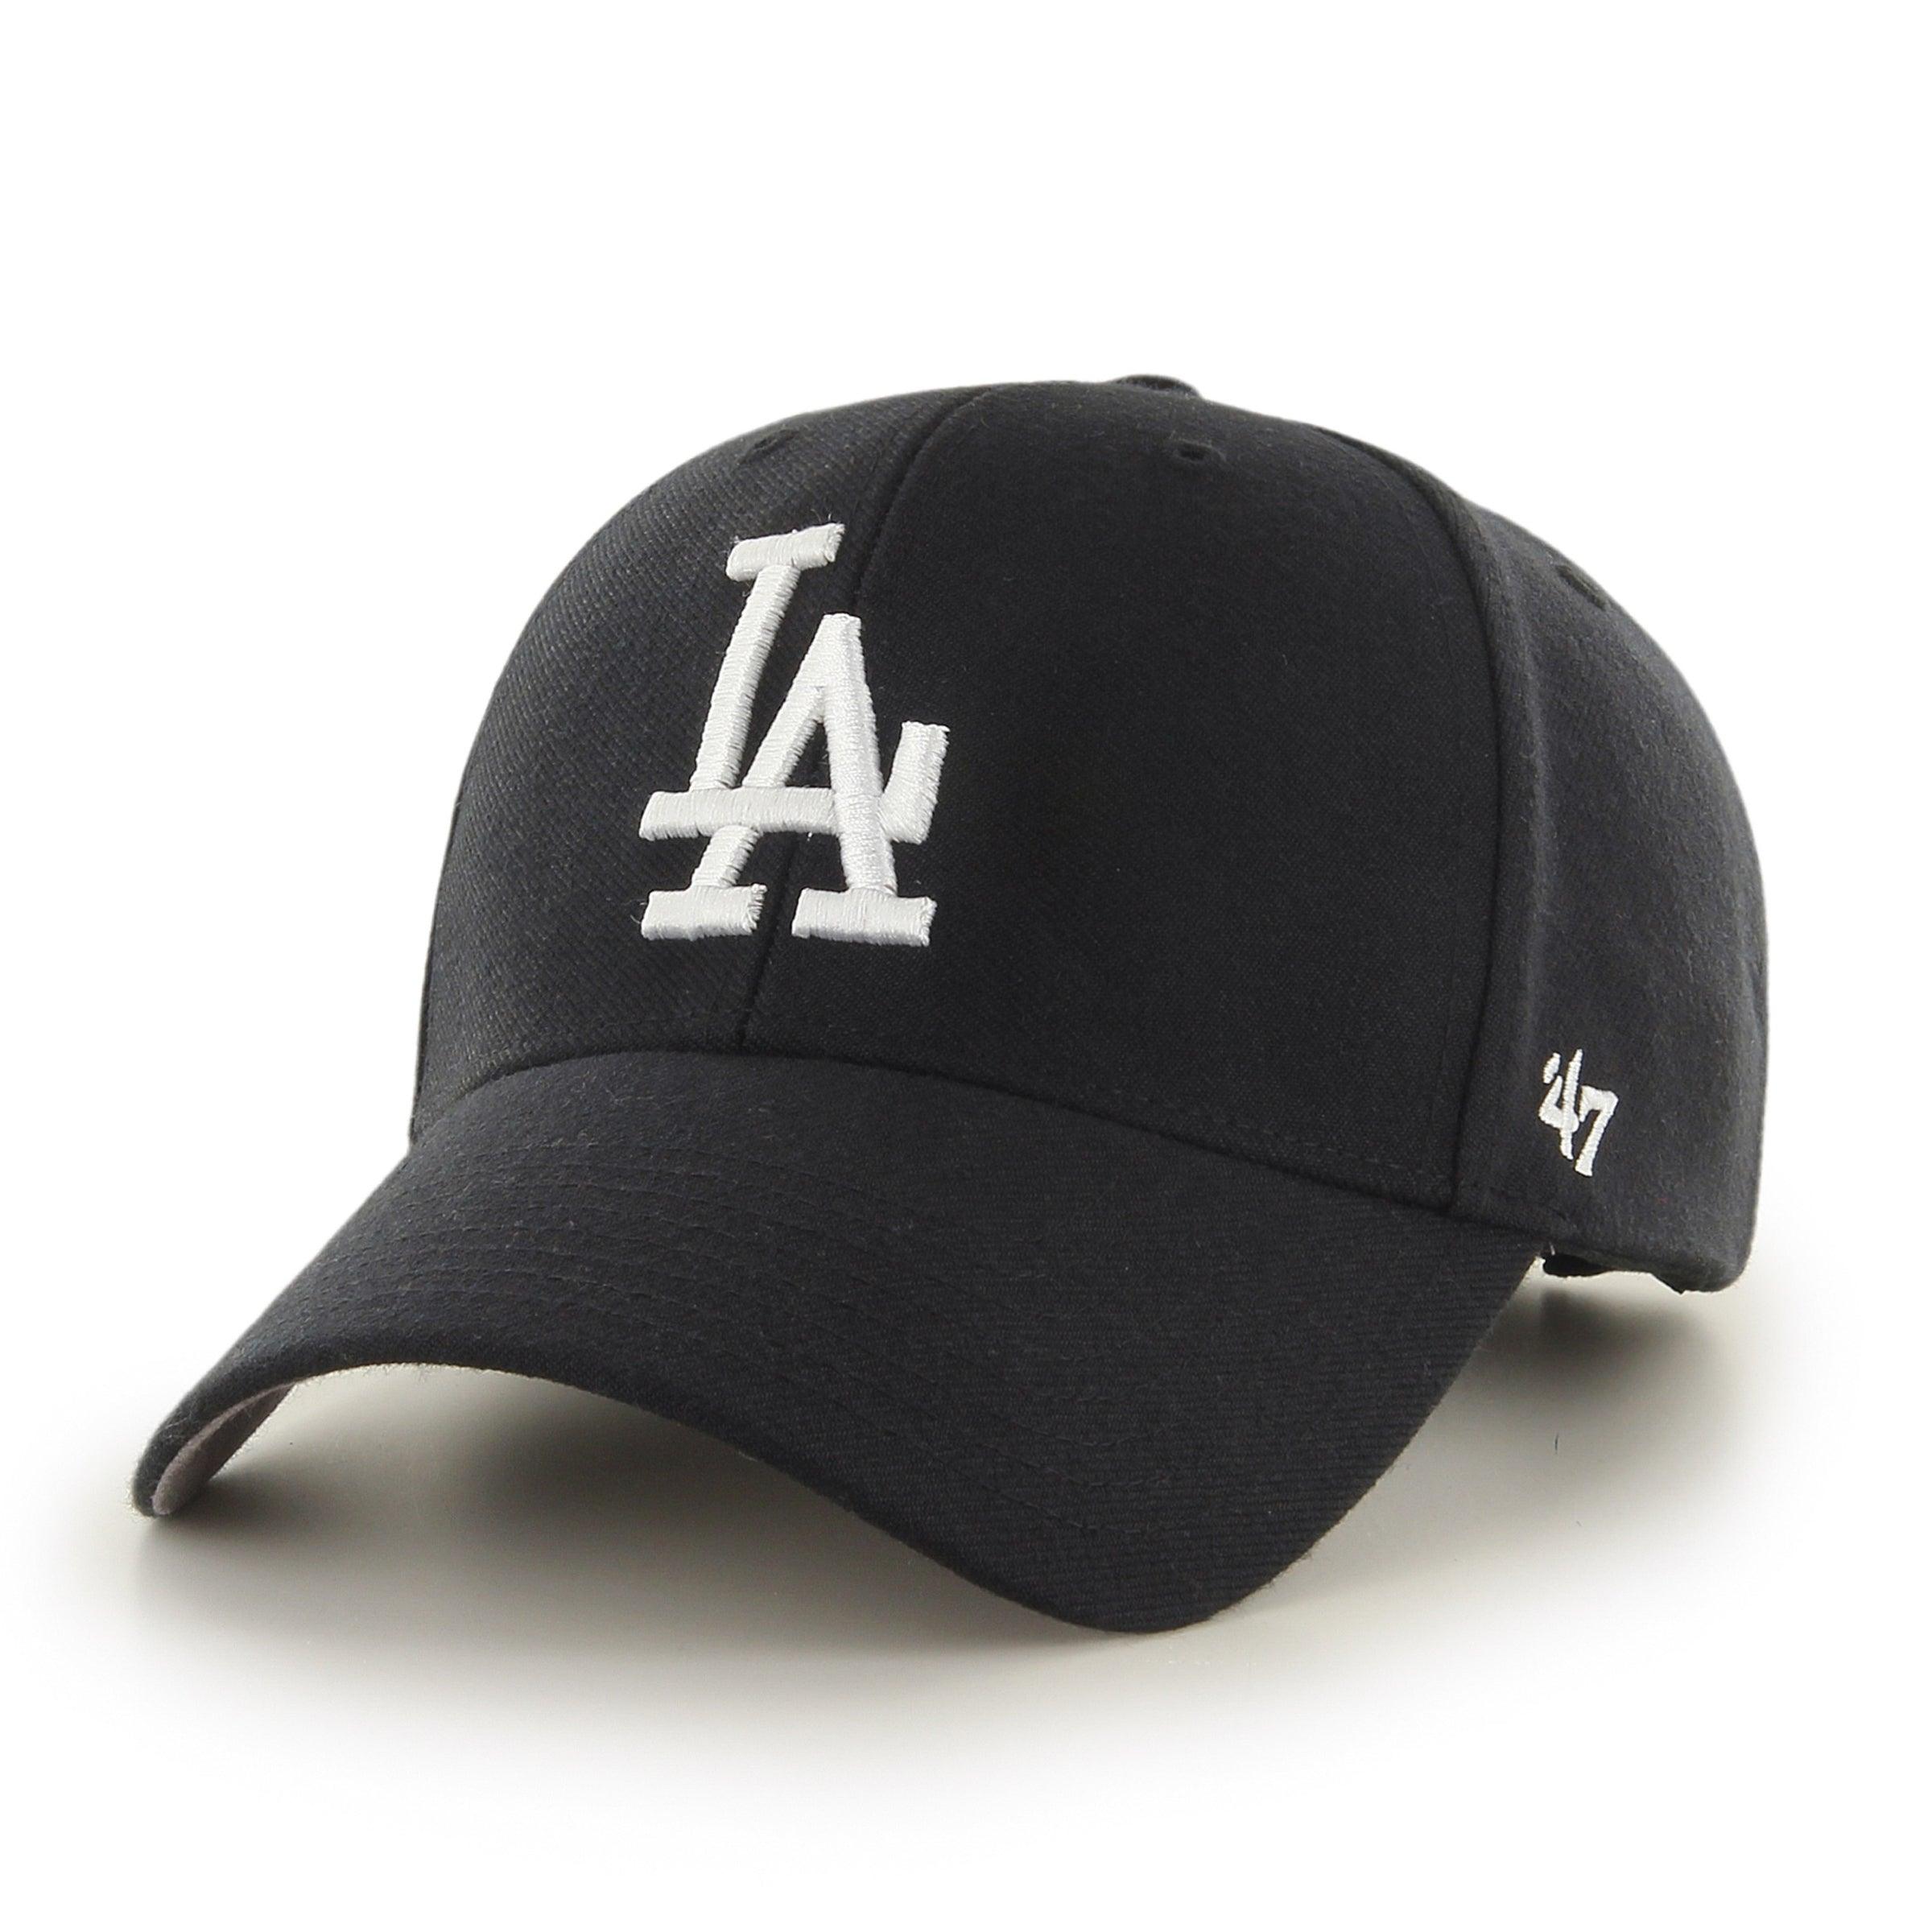 MVP LA Dodgers Cap in Black - Glue Store